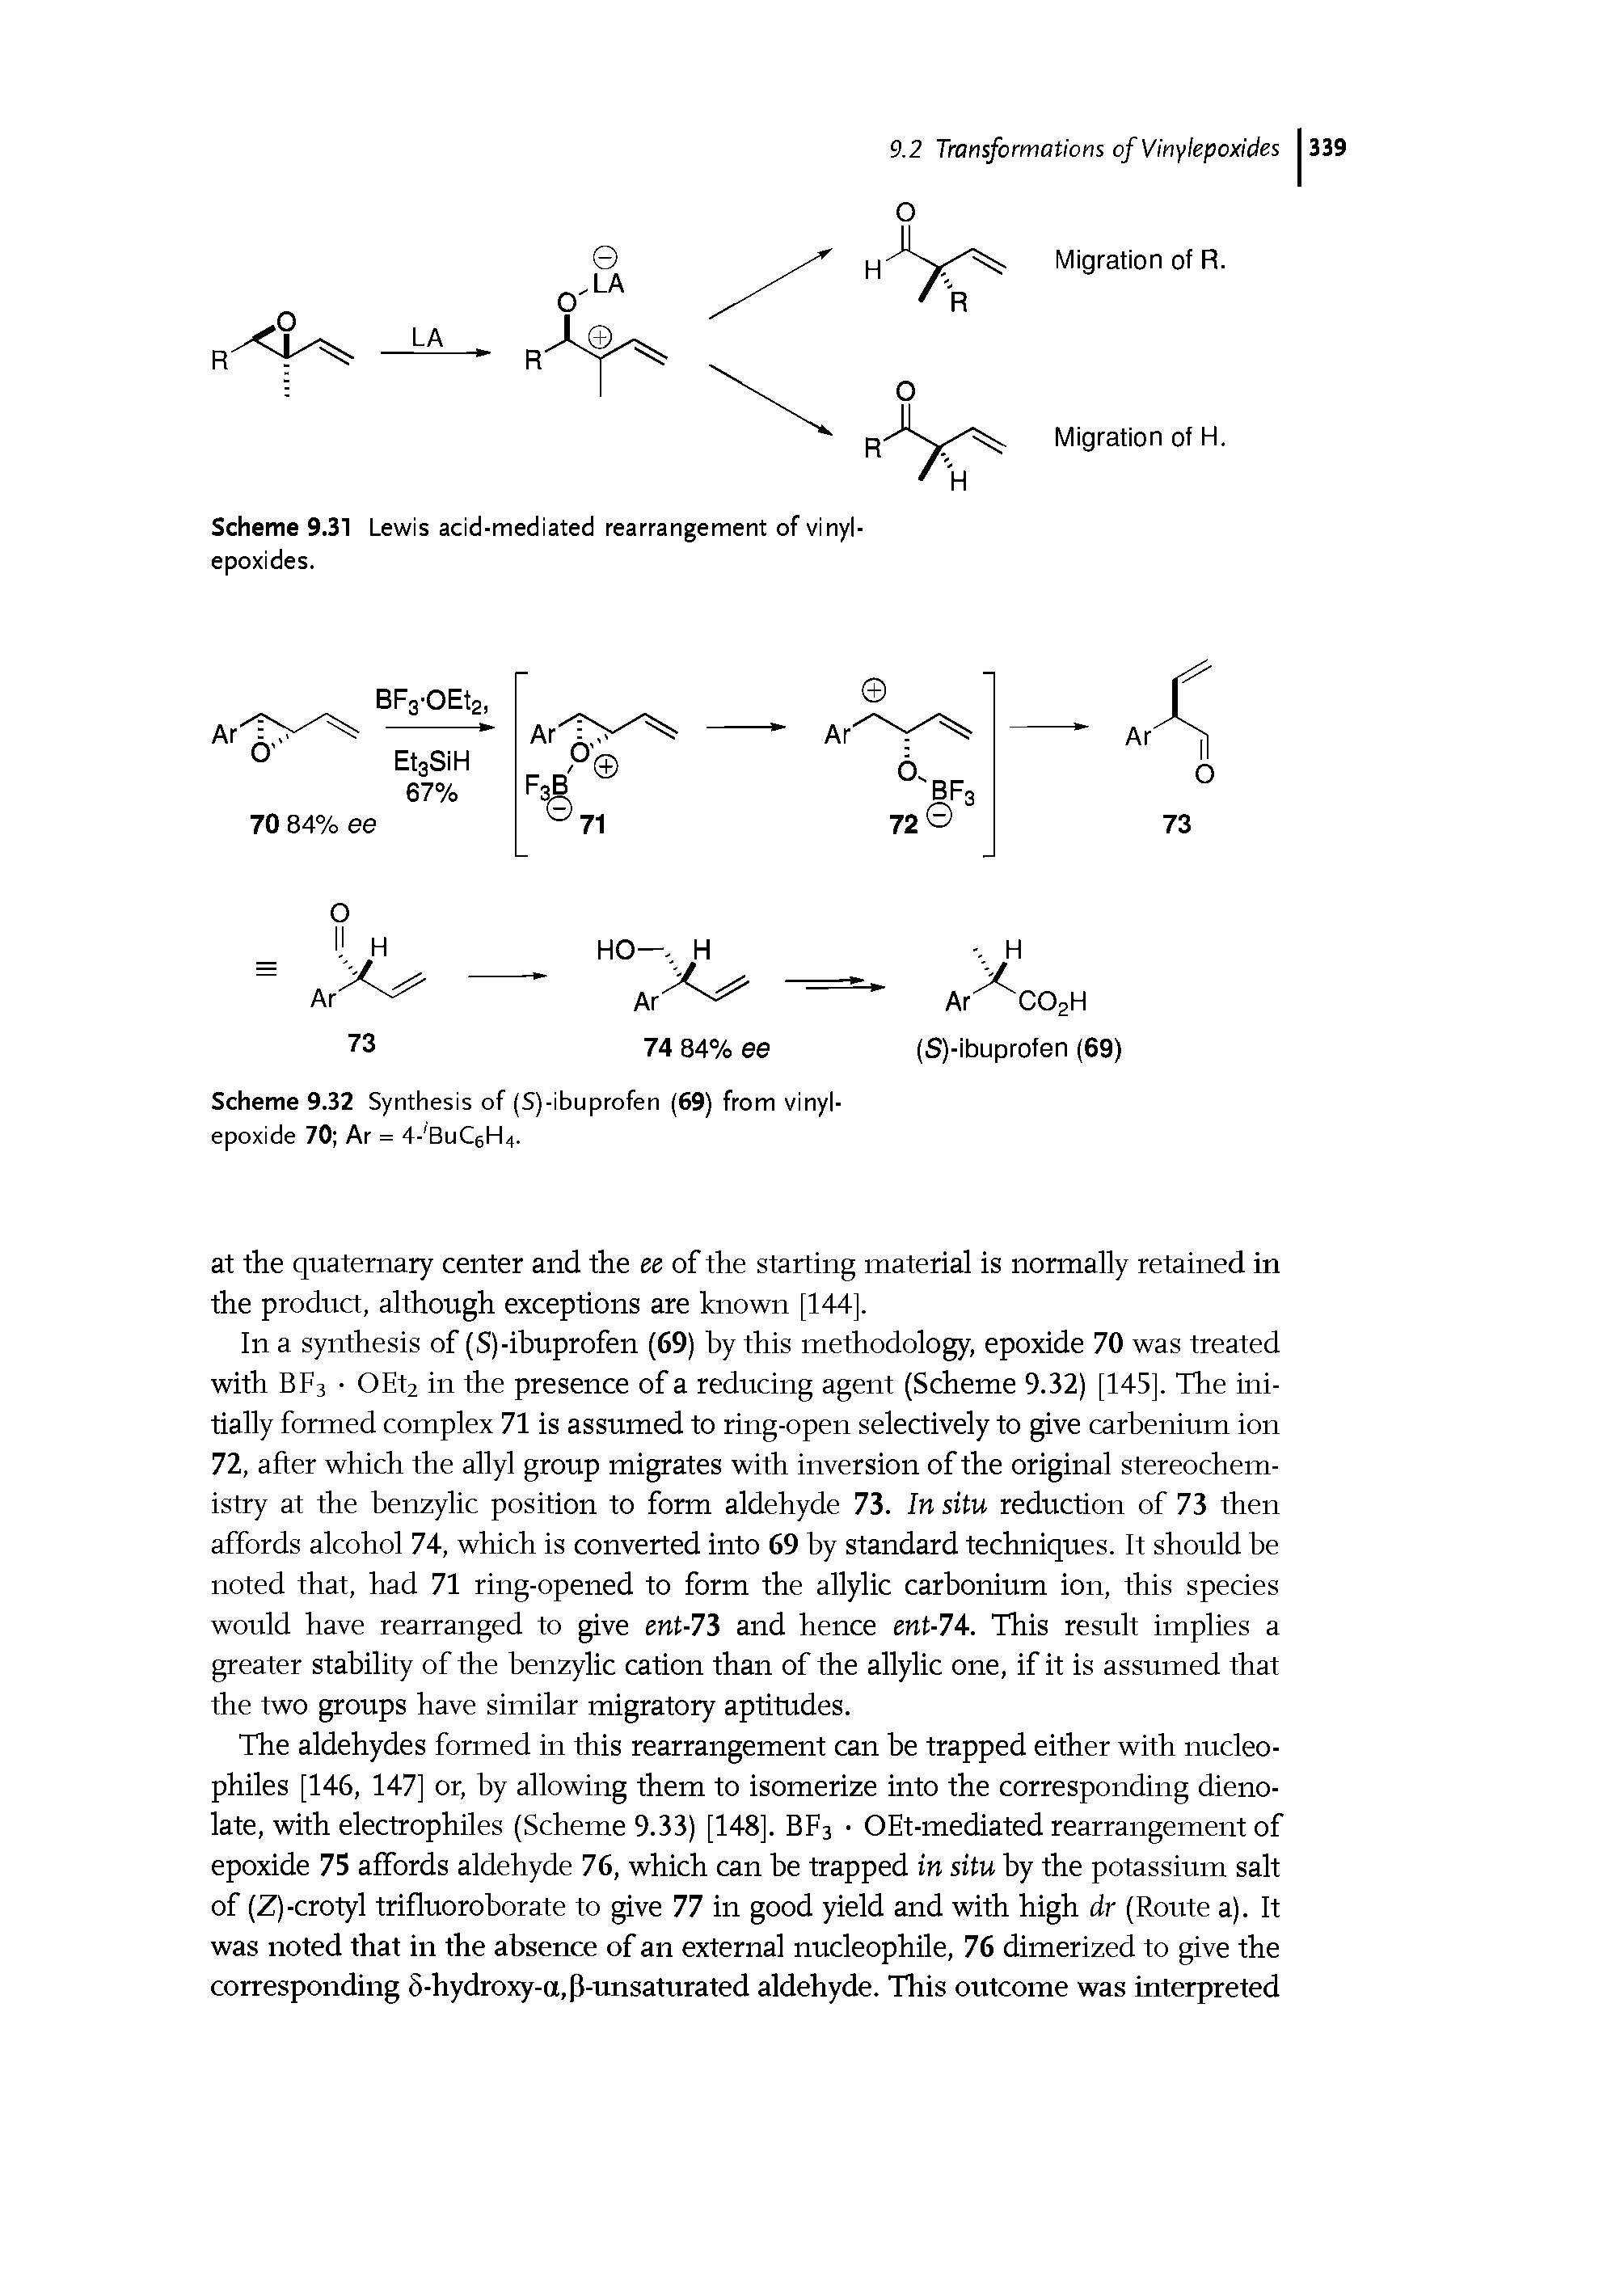 Scheme 9.32 Synthesis of (S)-ibuprofen (69) from vinyl-epoxide 70 Ar = 4- BuC6H4.